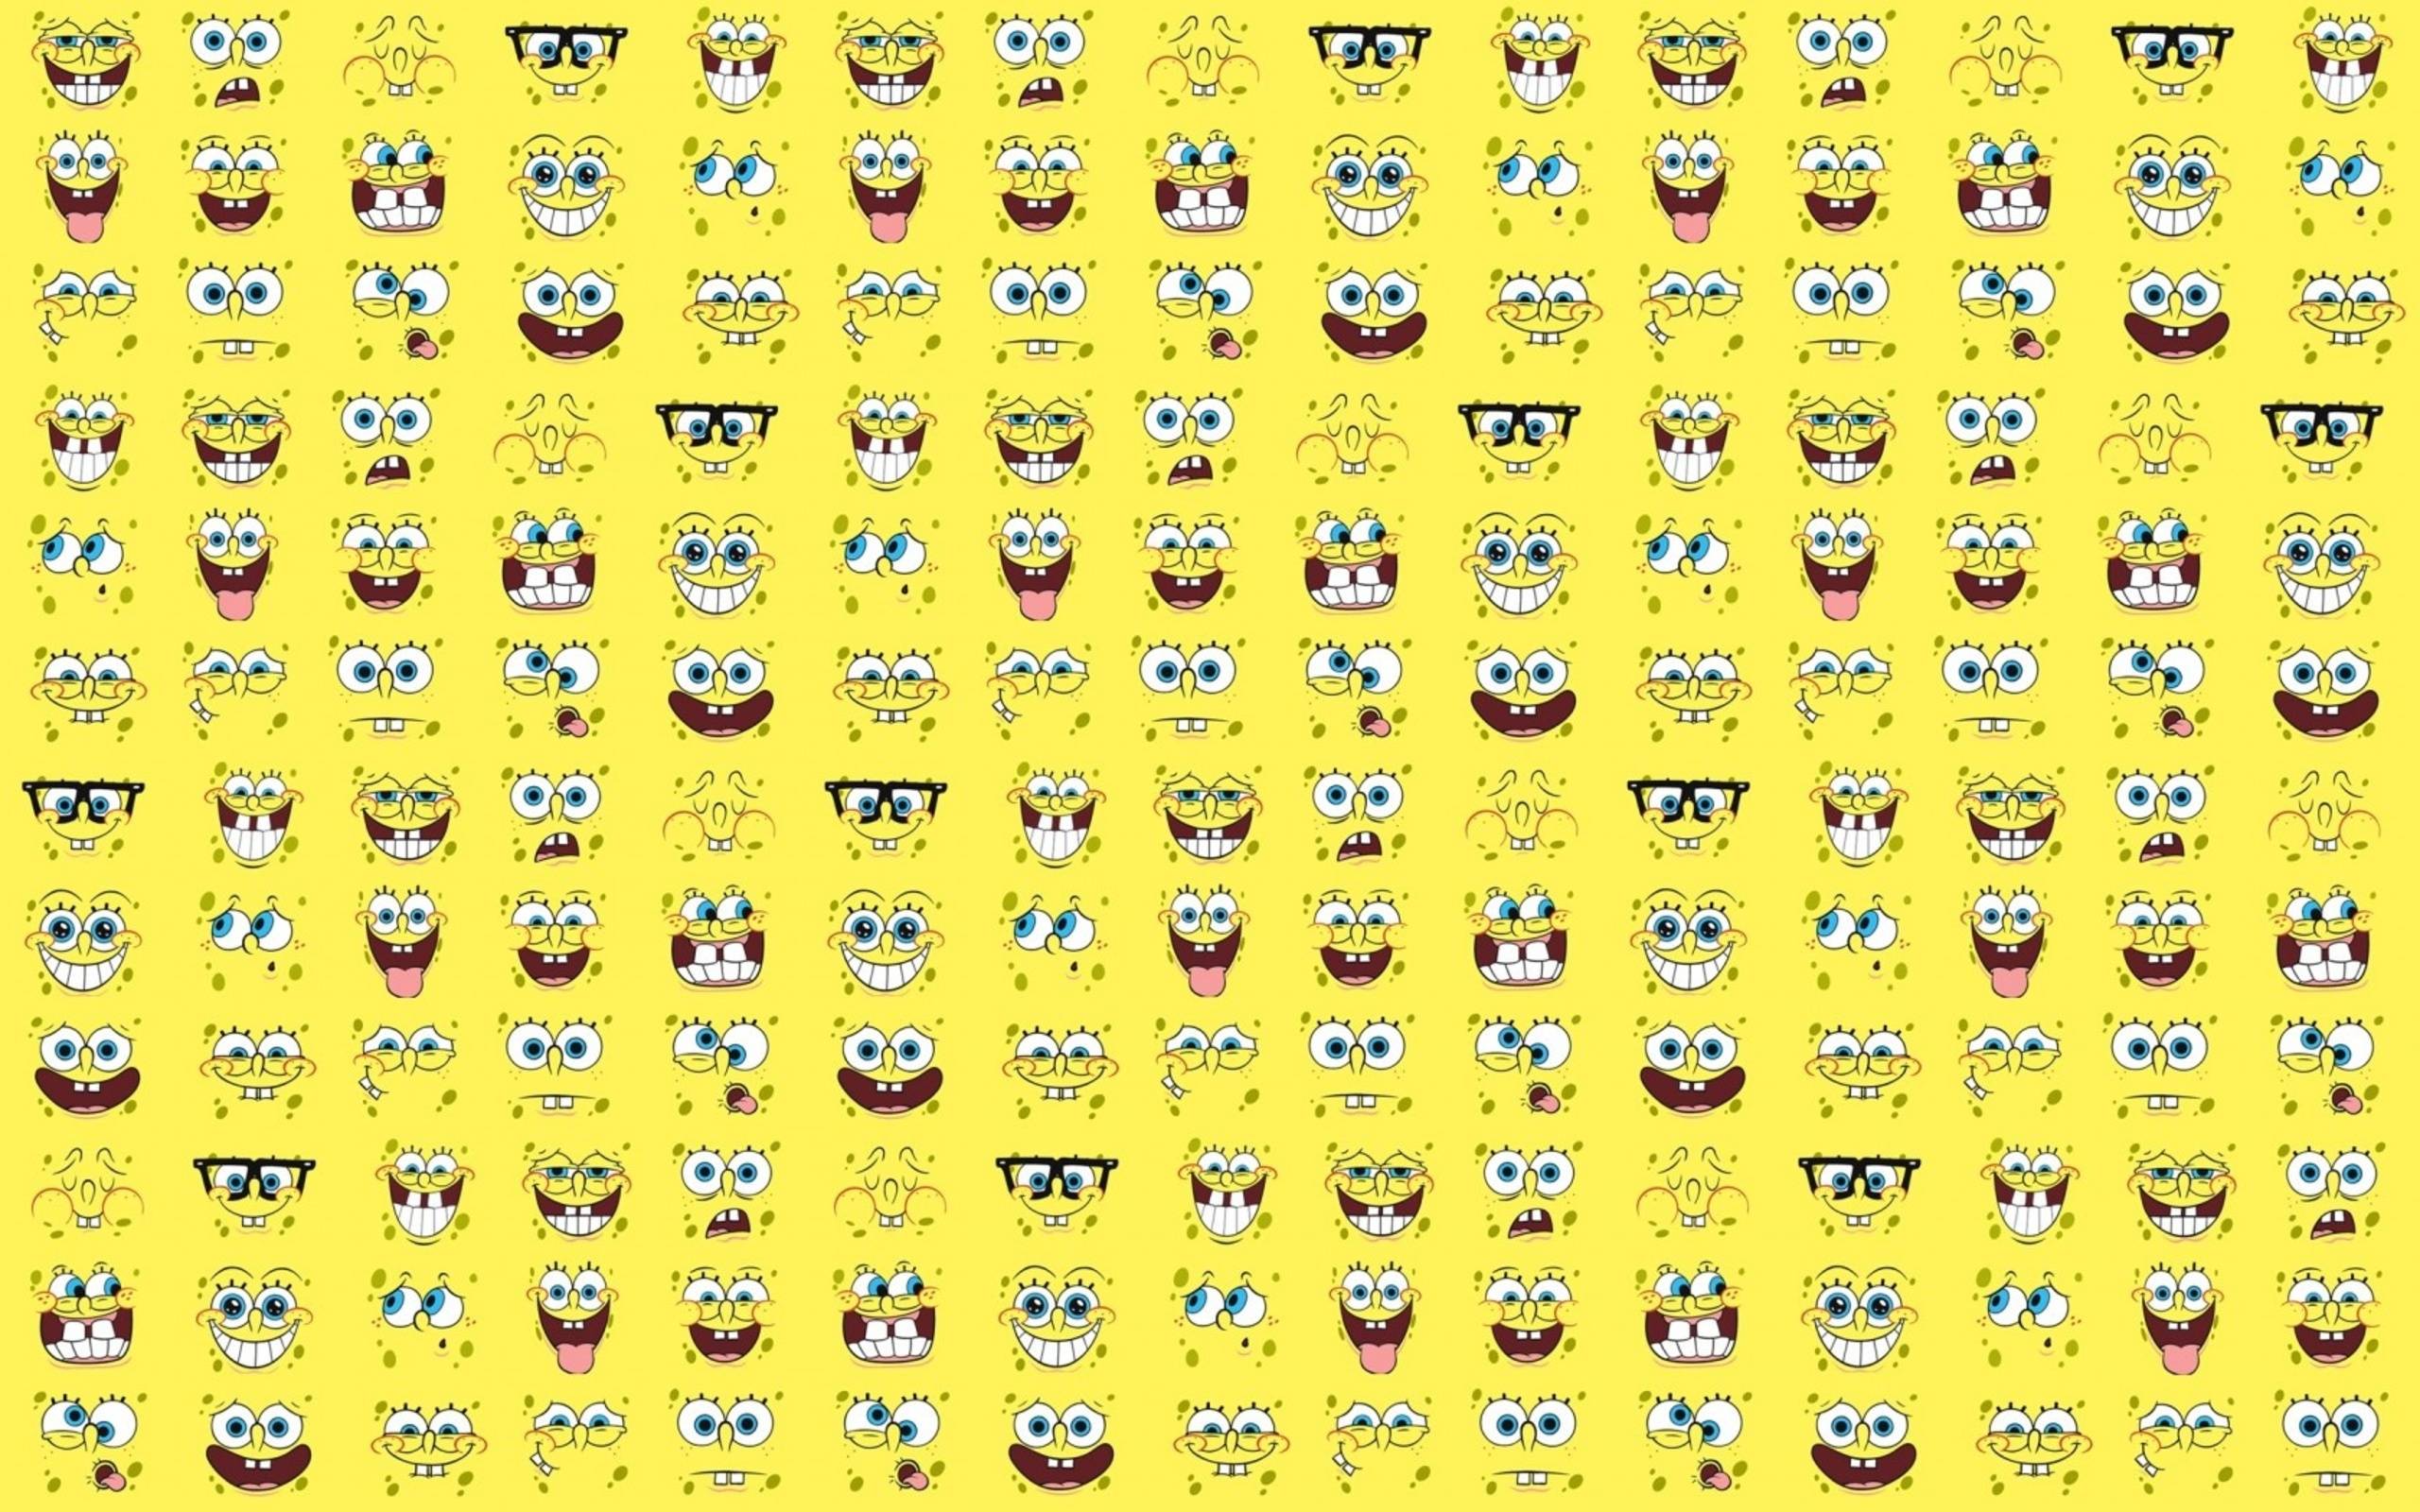 Spongebob Squarepants Computer Wallpaper, Desktop Background